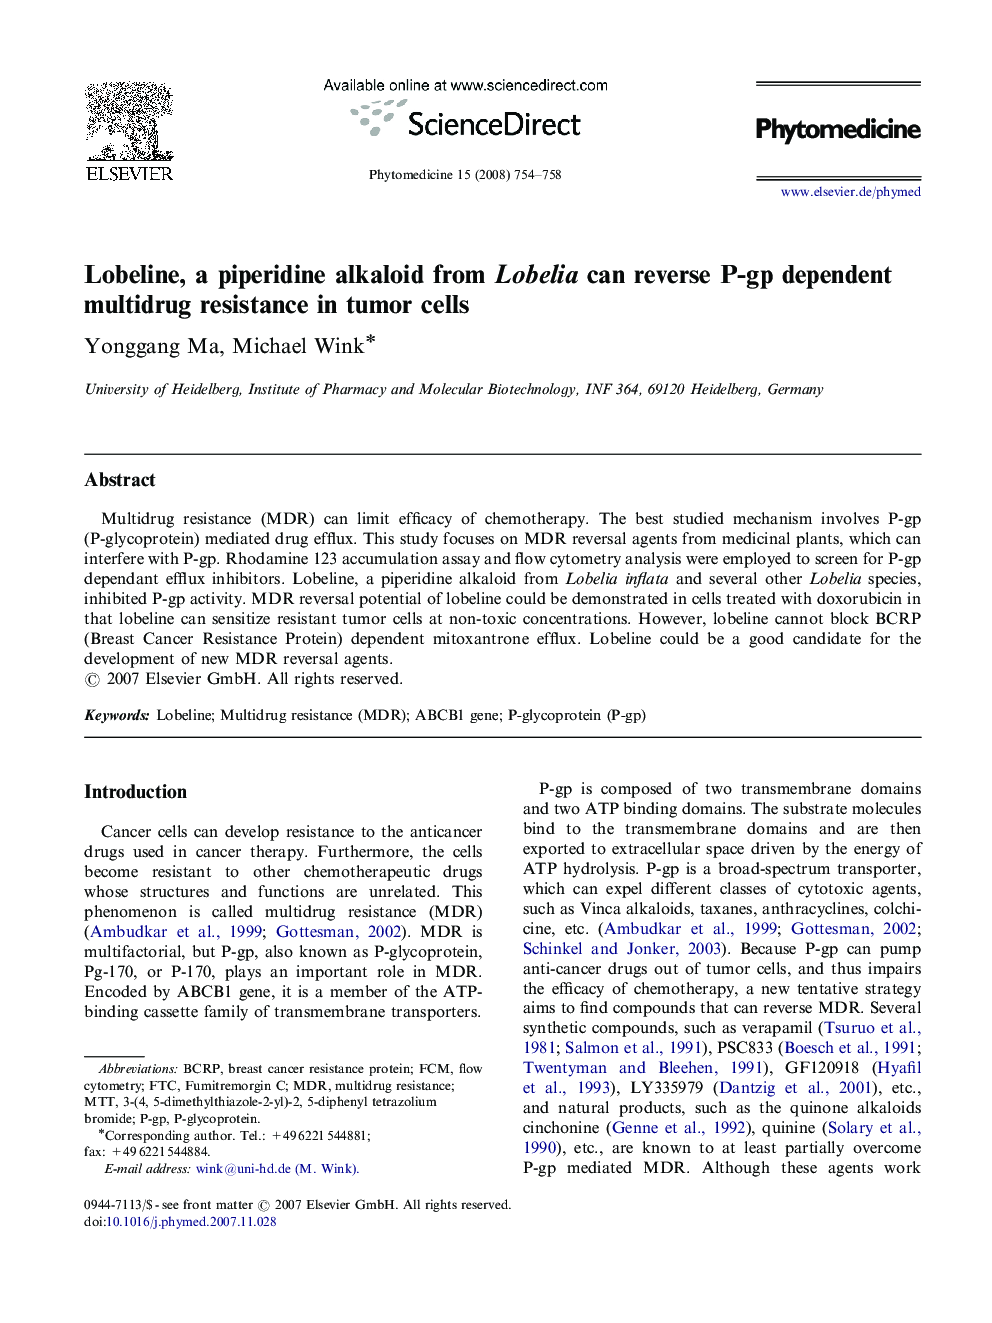 Lobeline, a piperidine alkaloid from Lobelia can reverse P-gp dependent multidrug resistance in tumor cells